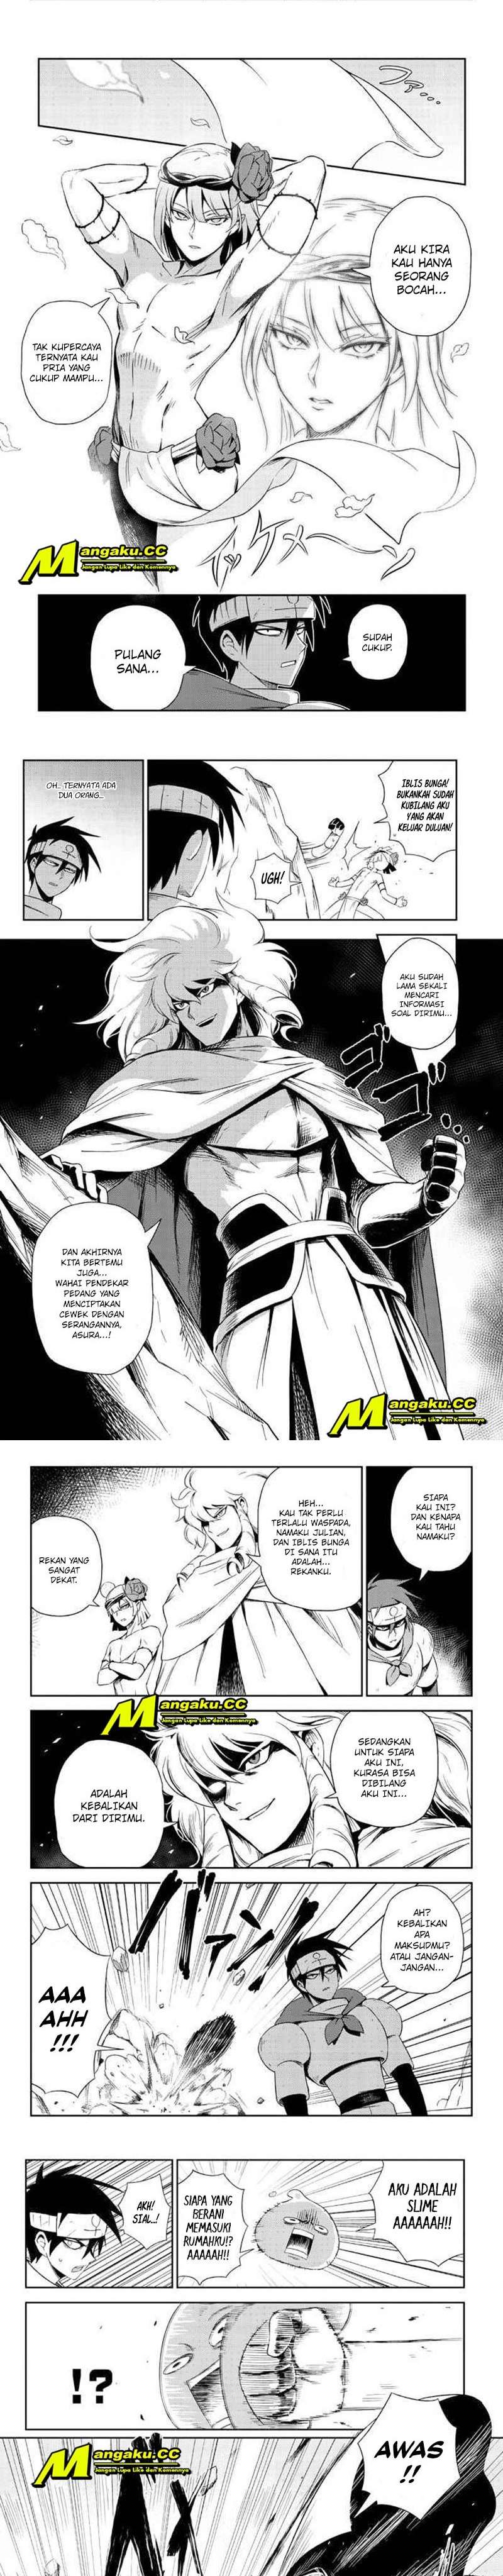 Transmoe Sword Fantasy Chapter 05